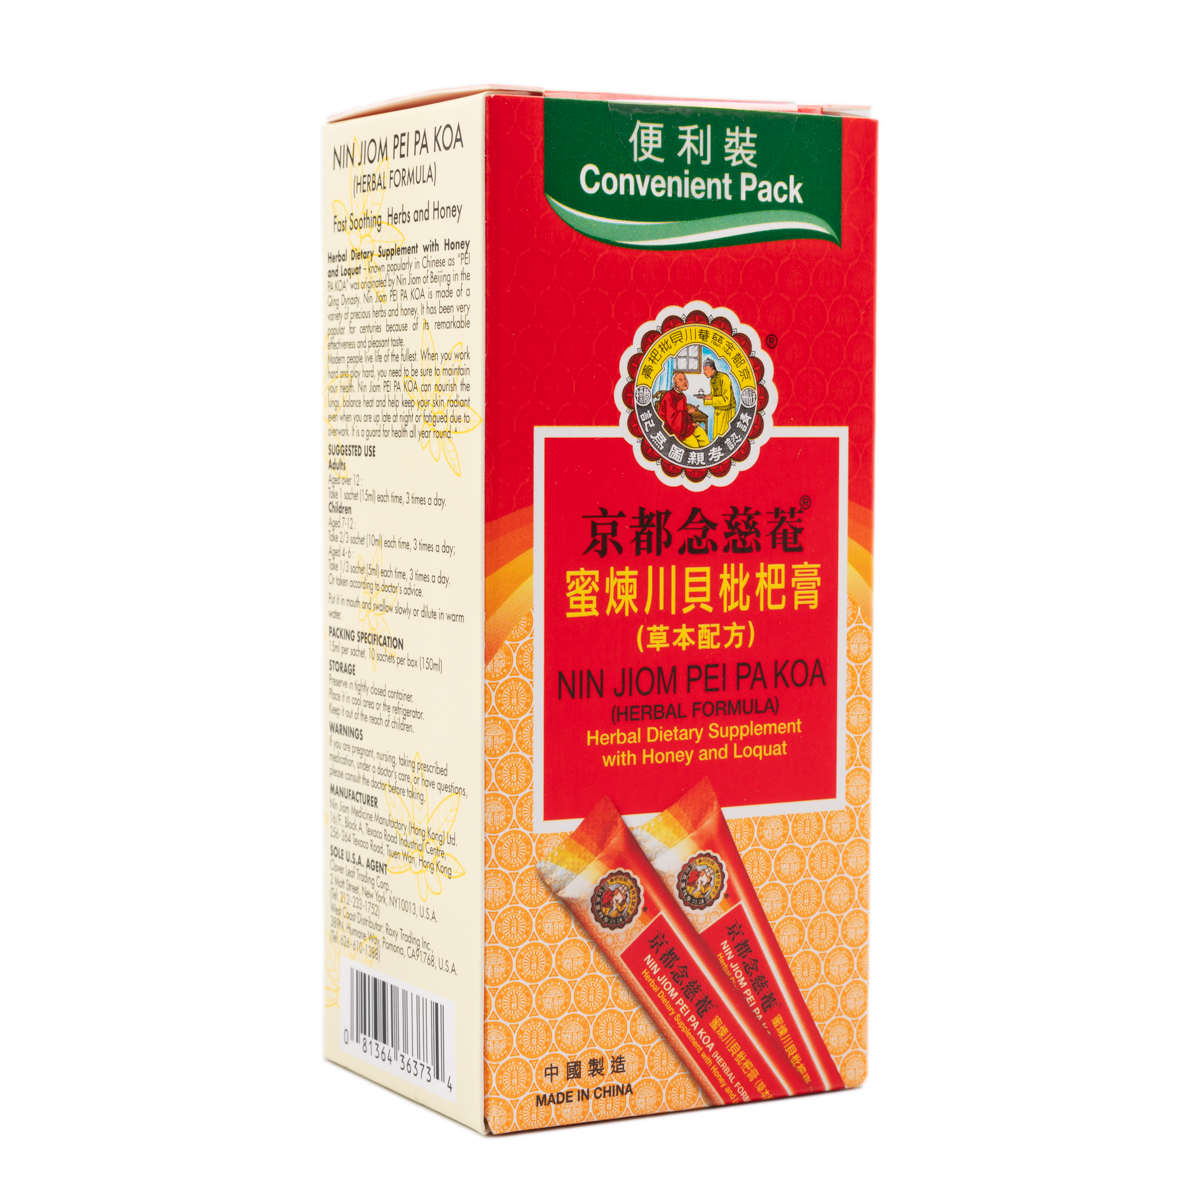 Nin Jiom Pei Pa Koa Convenient Pack 10x15ml with Honey and Loquat